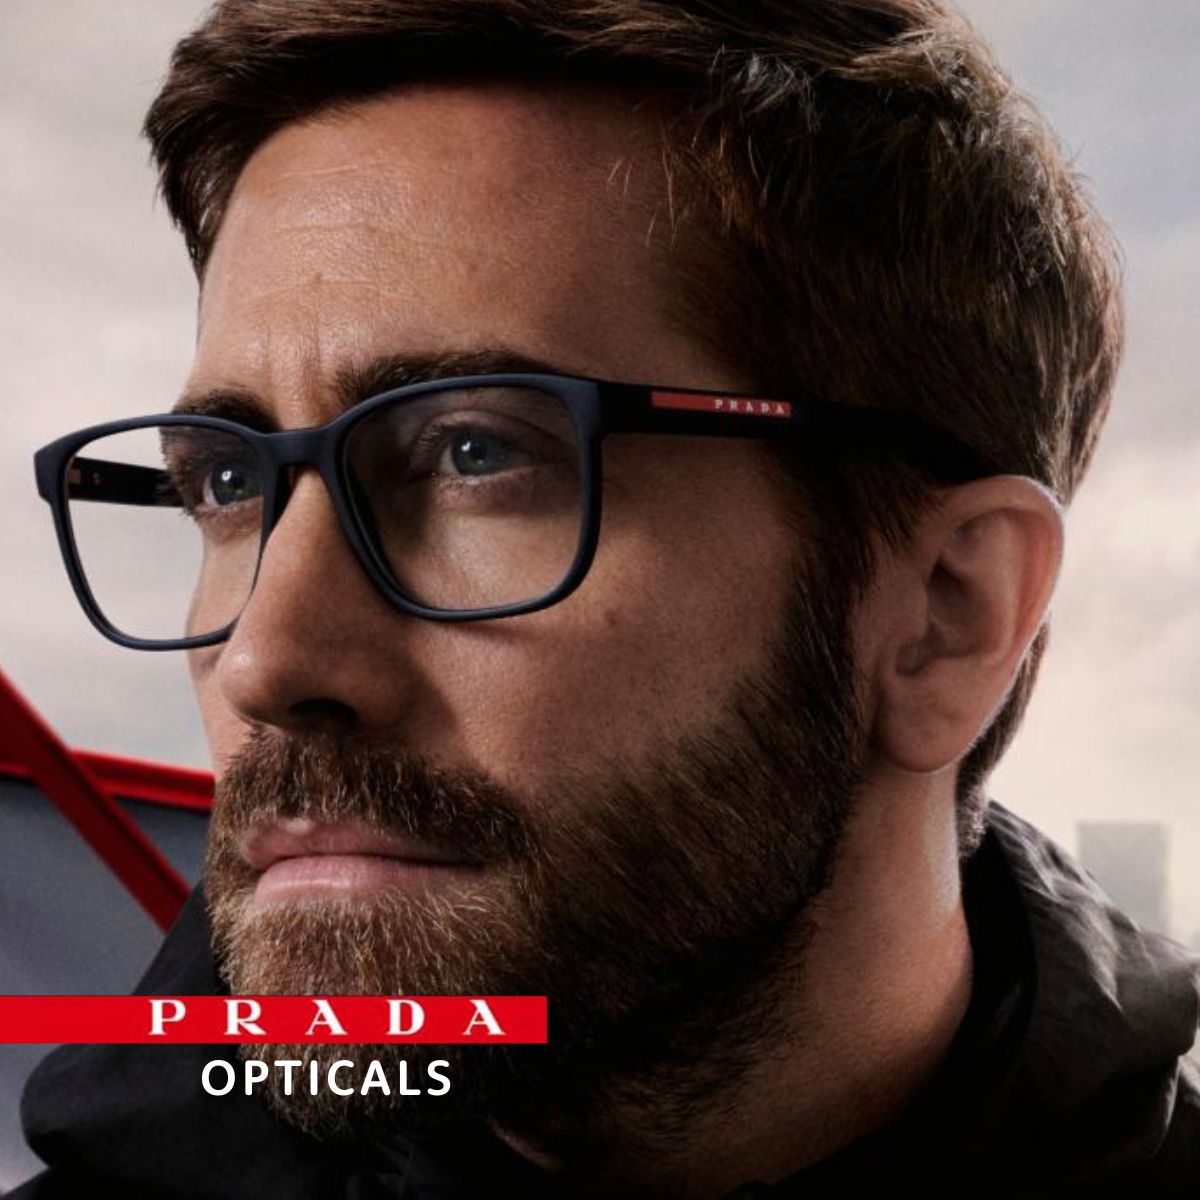 "Explore premium Prada Optical Glasses at Optorium. Shop fashionable frames for men and women online."